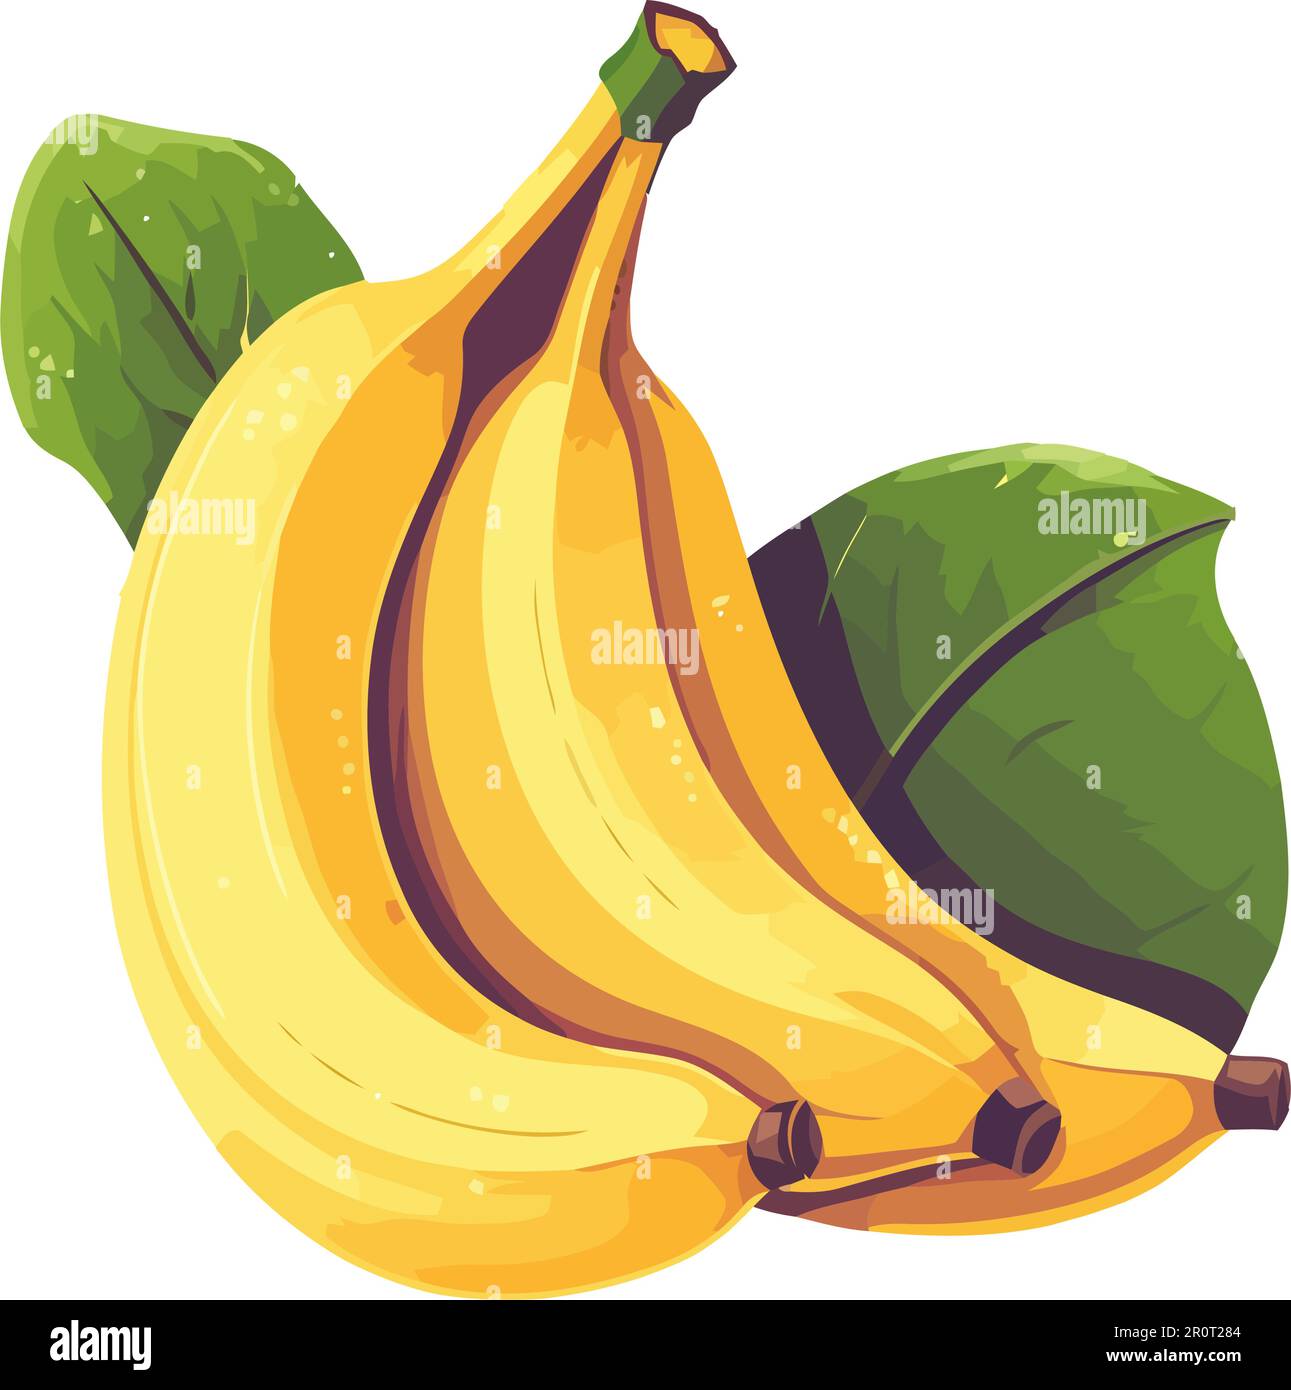 https://c8.alamy.com/comp/2R0T284/ripe-banana-fresh-and-organic-healthy-snack-2R0T284.jpg